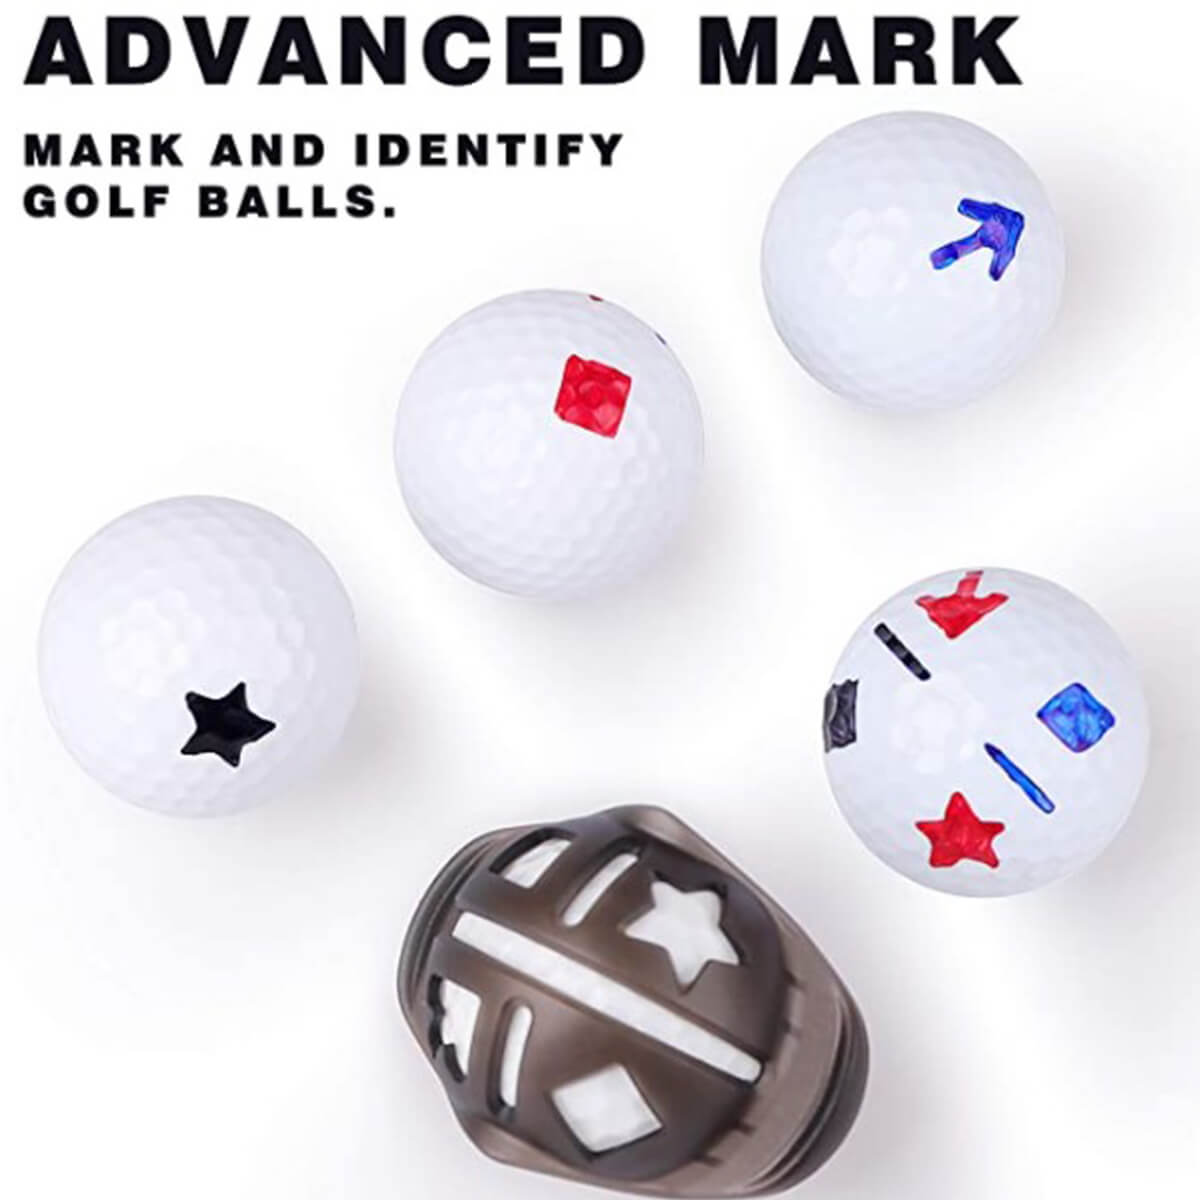 Advanced Mark Tour Alignment Golf Ball Stencil Set